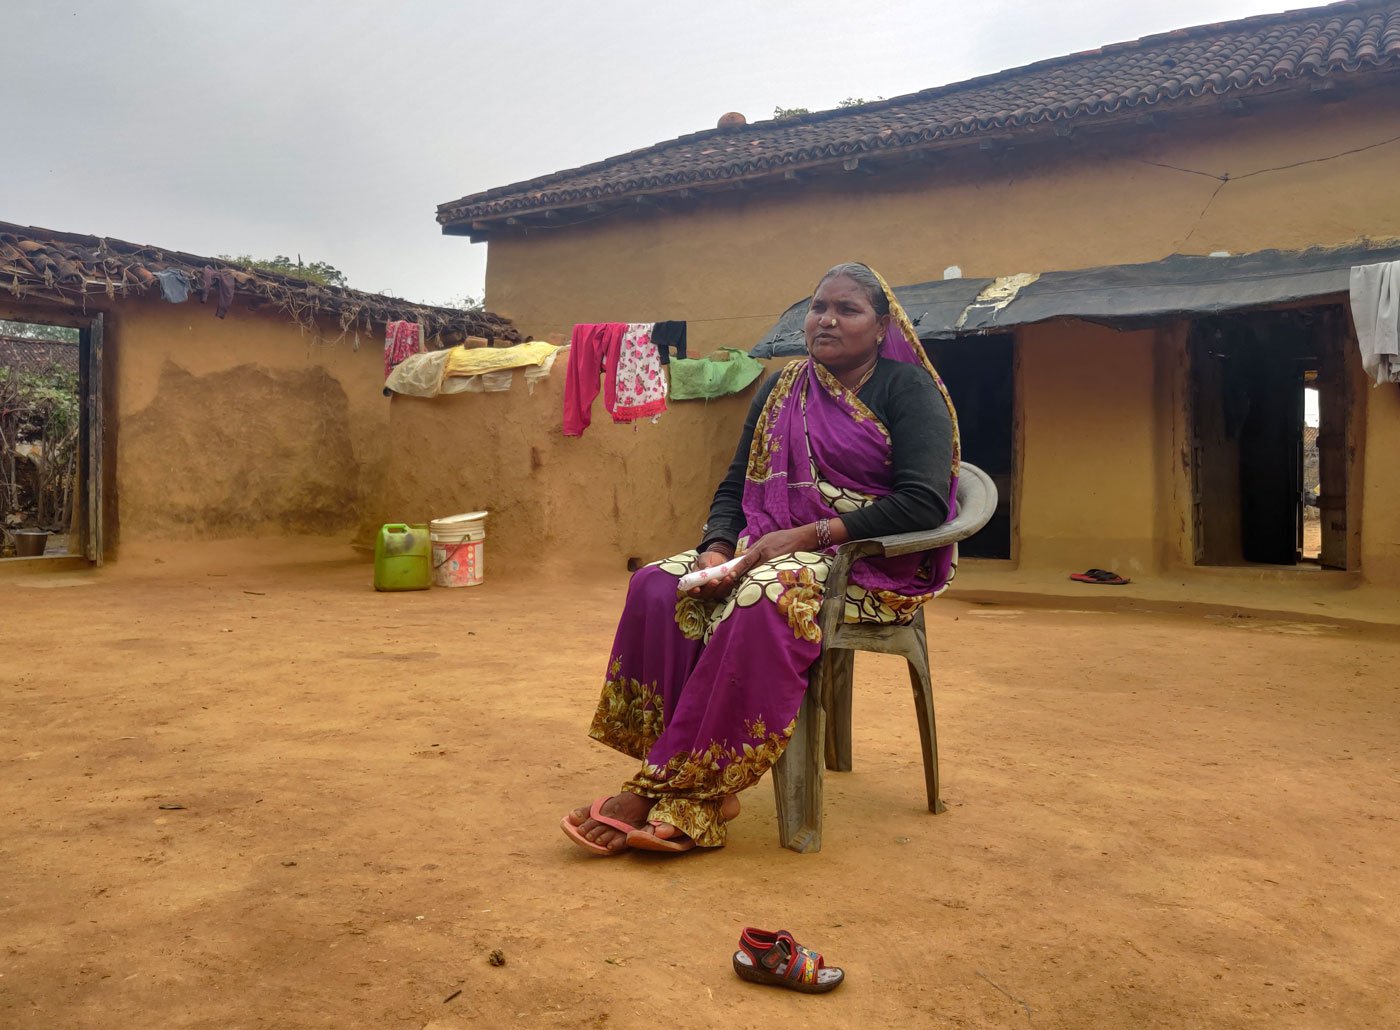 Salimun at home in Amdhha Charanpur village. She says she has faced humiliating experiences while visiting health facilities